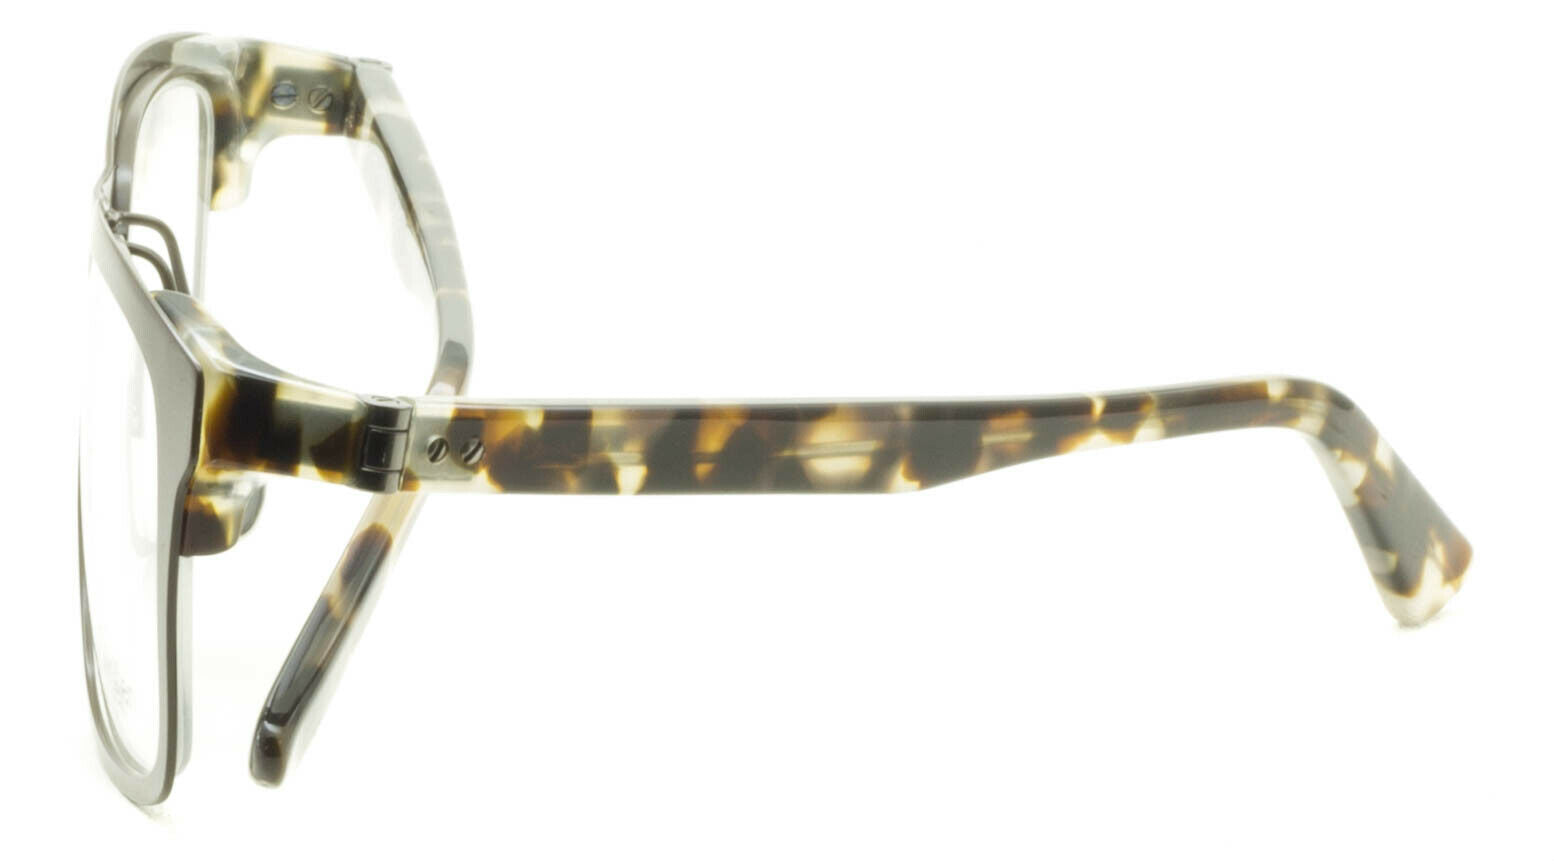 CALVIN KLEIN CK 8025 223 52mm Eyewear RX Optical FRAMES Eyeglasses Glasses - New